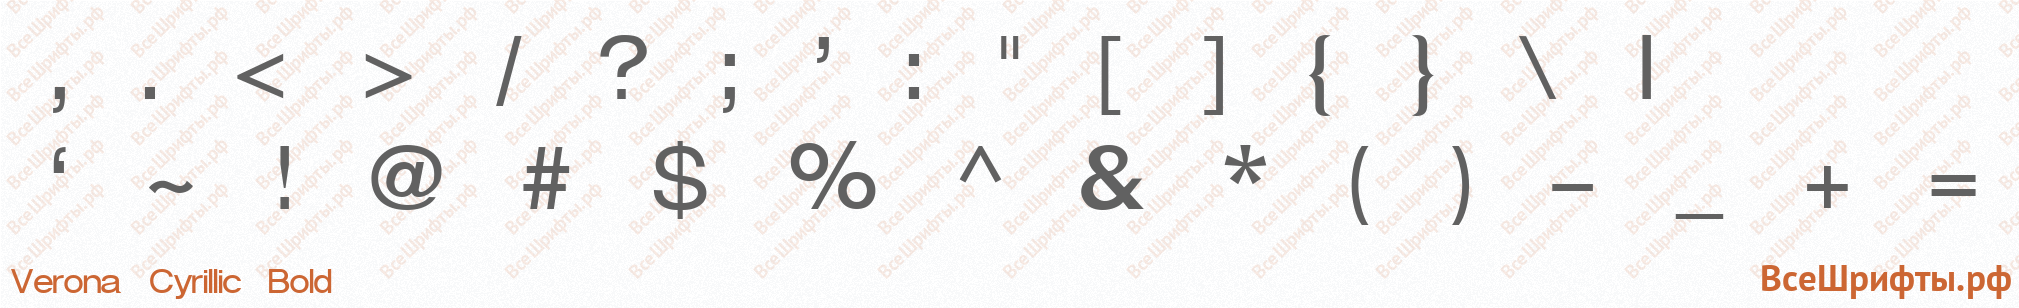 Шрифт Verona Cyrillic Bold со знаками препинания и пунктуации